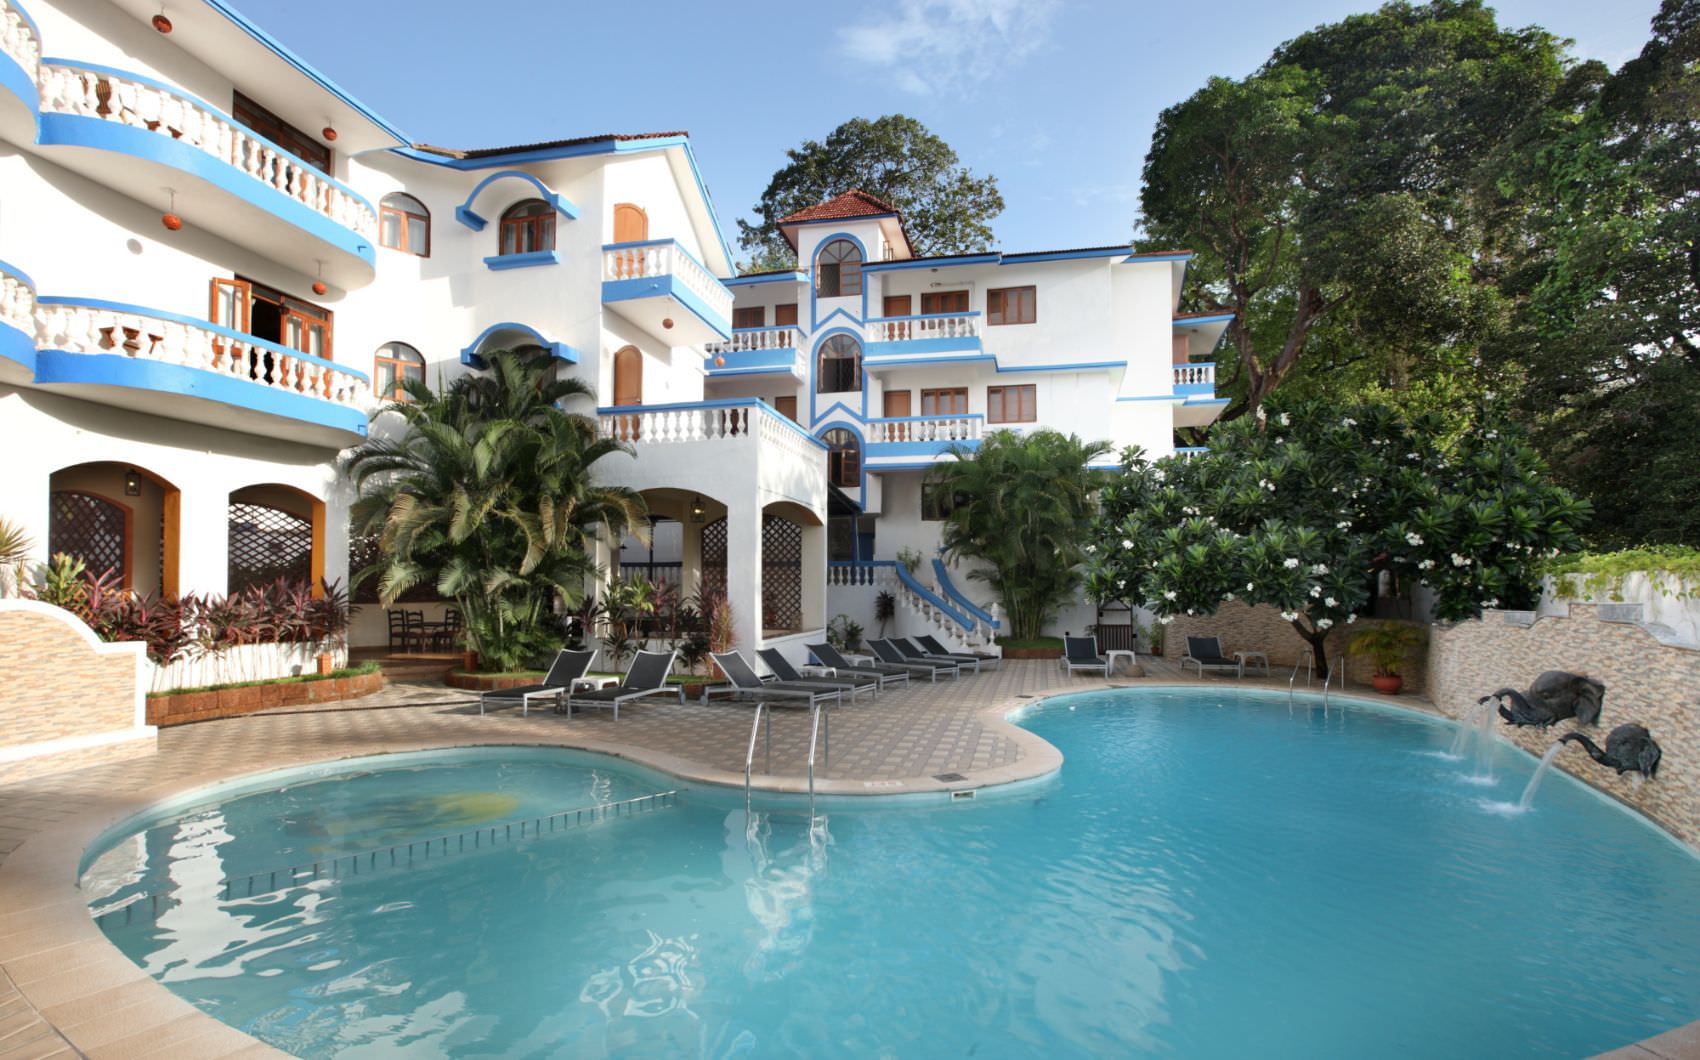 Book your room at Karma MonteRio Resort next to Baga river, North Goa